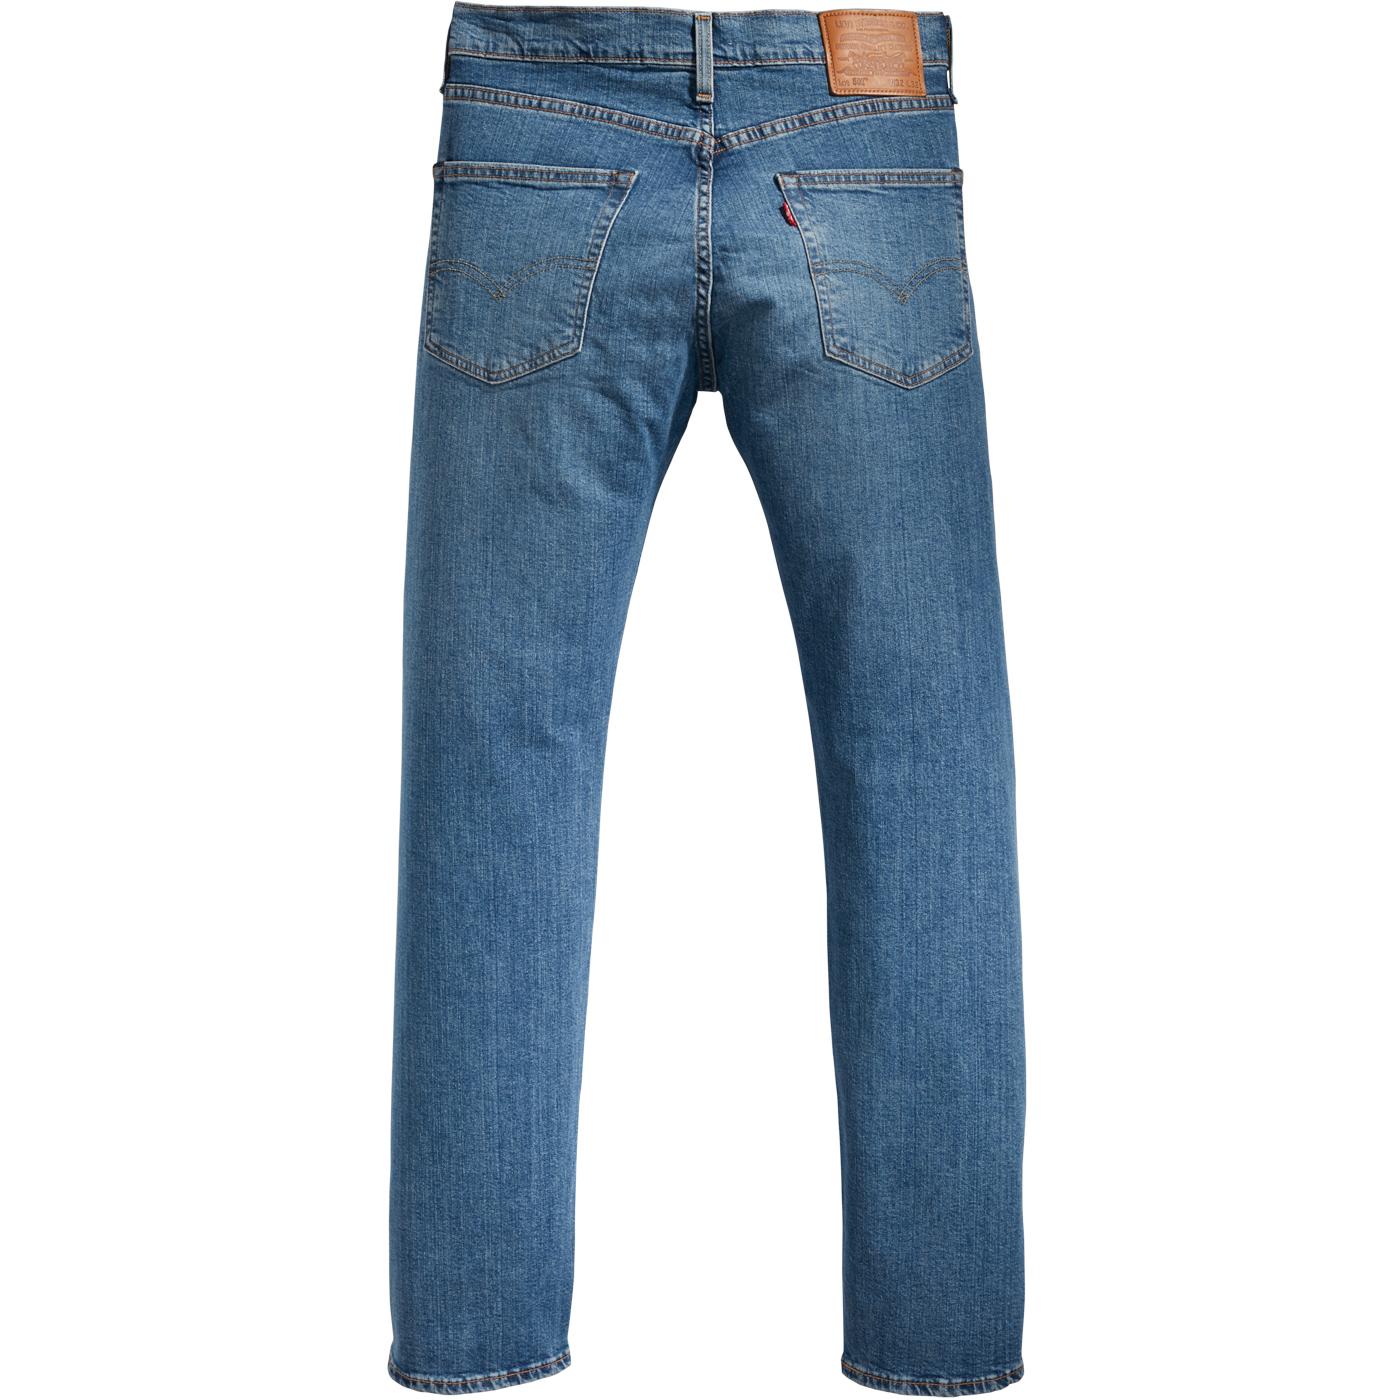 LEVI'S 502 Men's Retro Mod Regular Taper Jeans Wagu Puddle